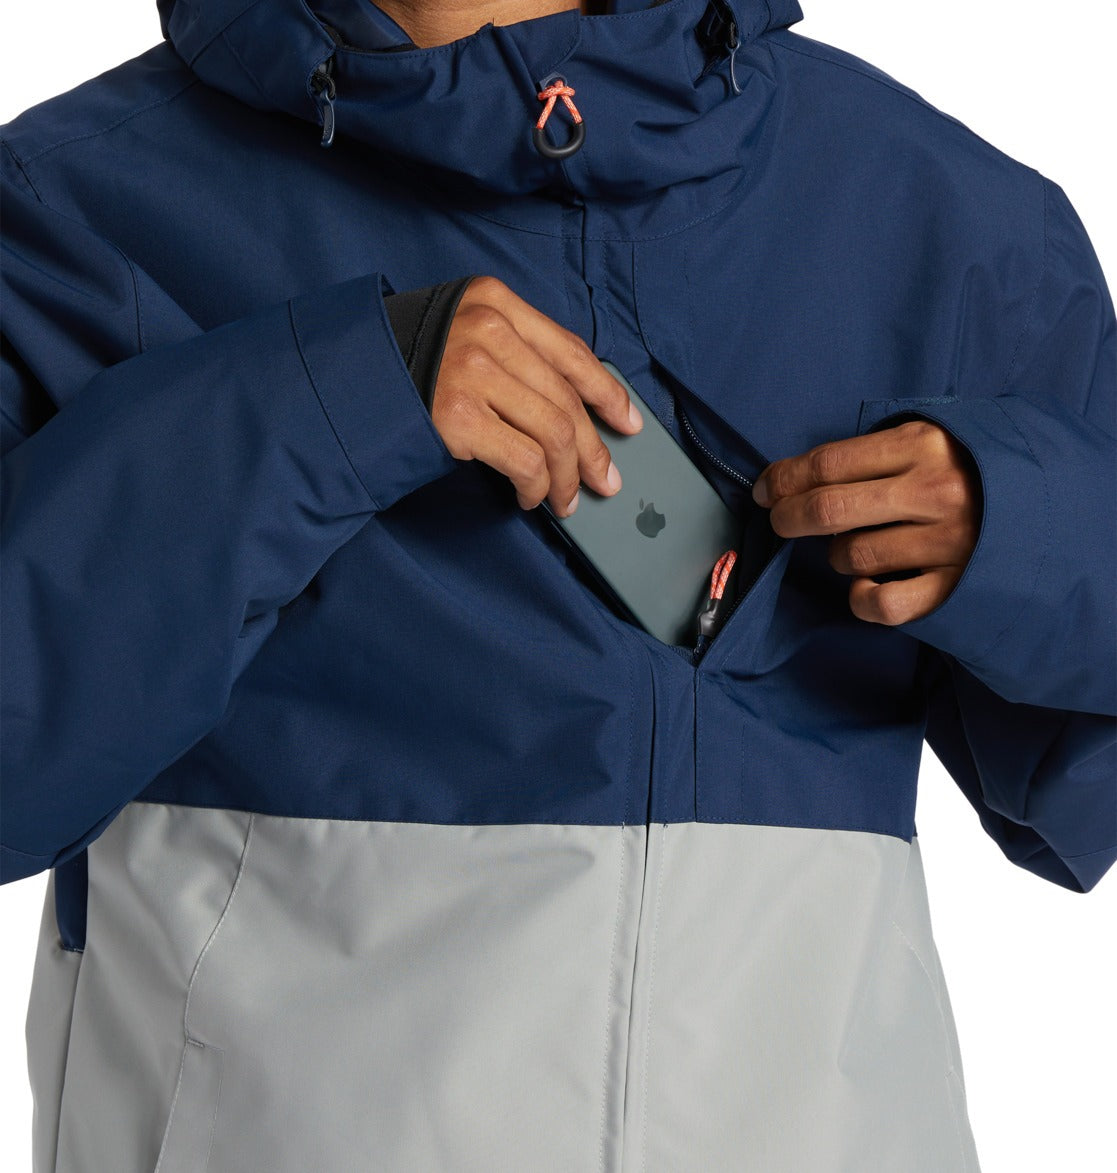 Basis Technical Snow Jacket